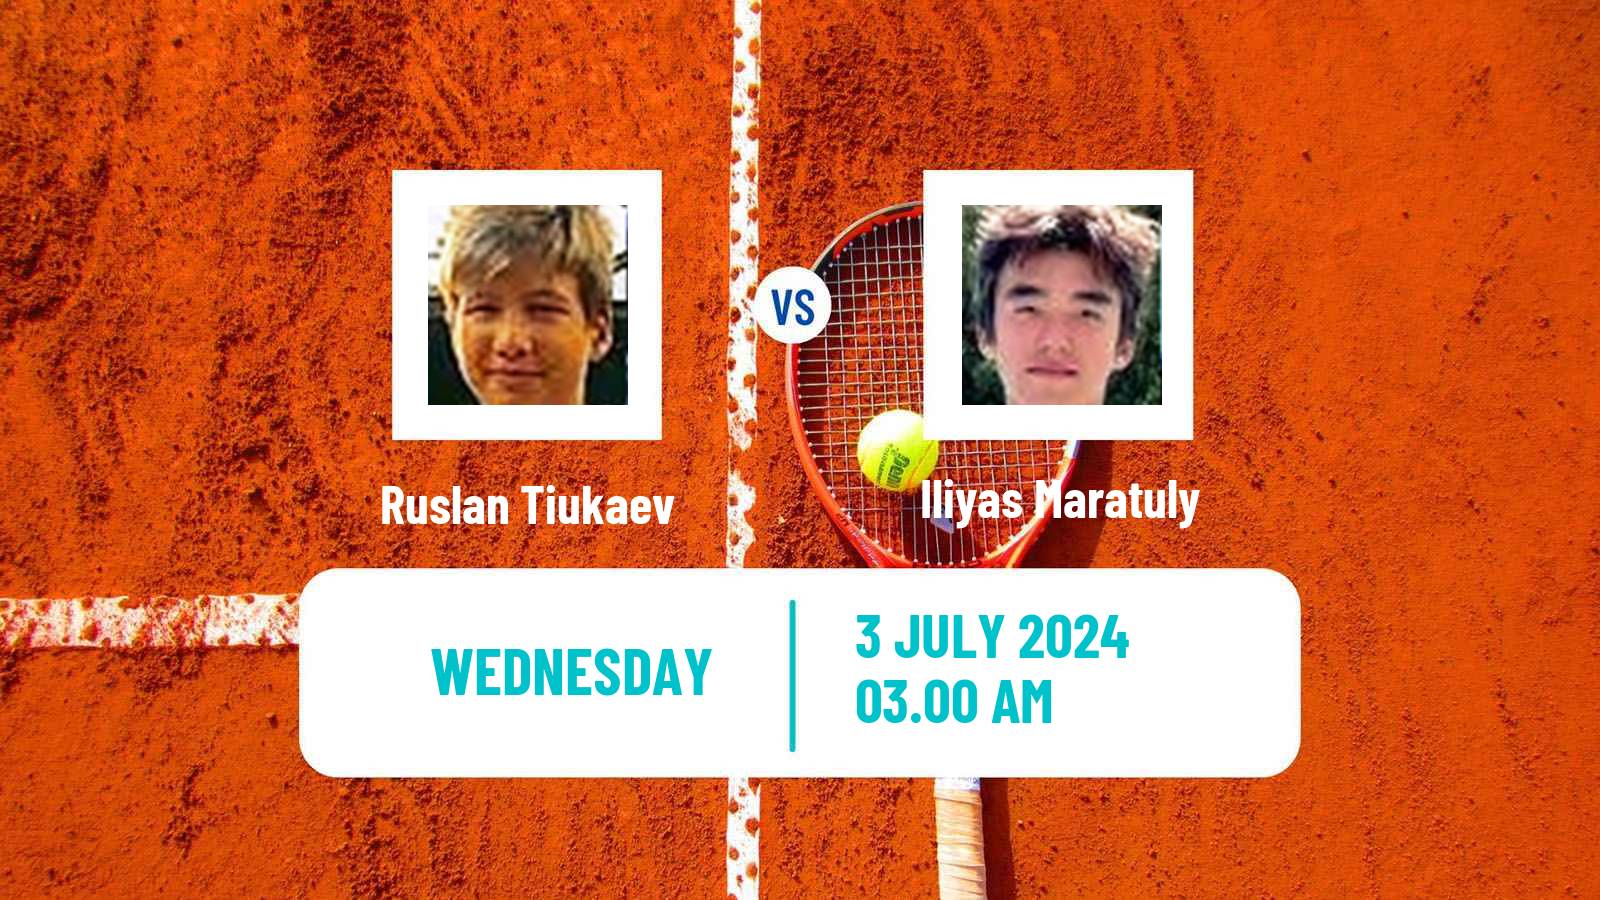 Tennis ITF M15 Ust Kamenogorsk 2 Men 2024 Ruslan Tiukaev - Iliyas Maratuly